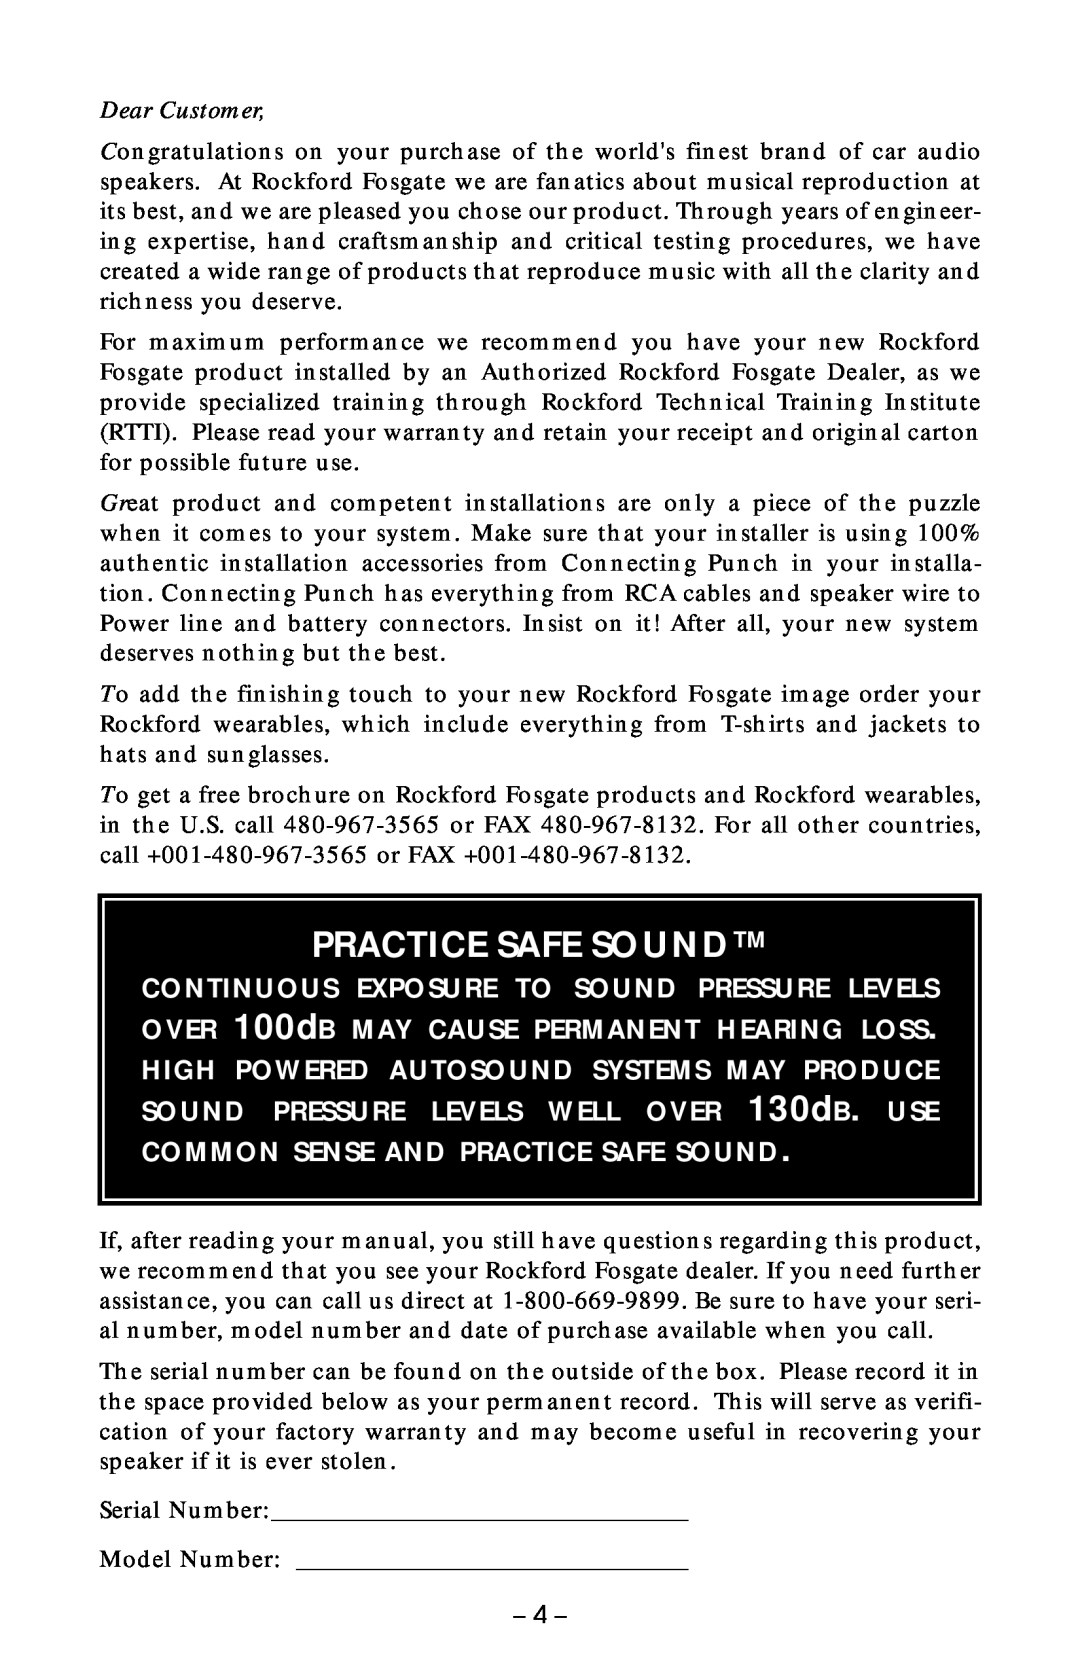 Rockford Fosgate RFP2215, RFR2215, RFP2208, RFP2210, RFD1210, RFD1218, RFD1212, RFR2210 manual Practice Safe Sound, Dear Customer 